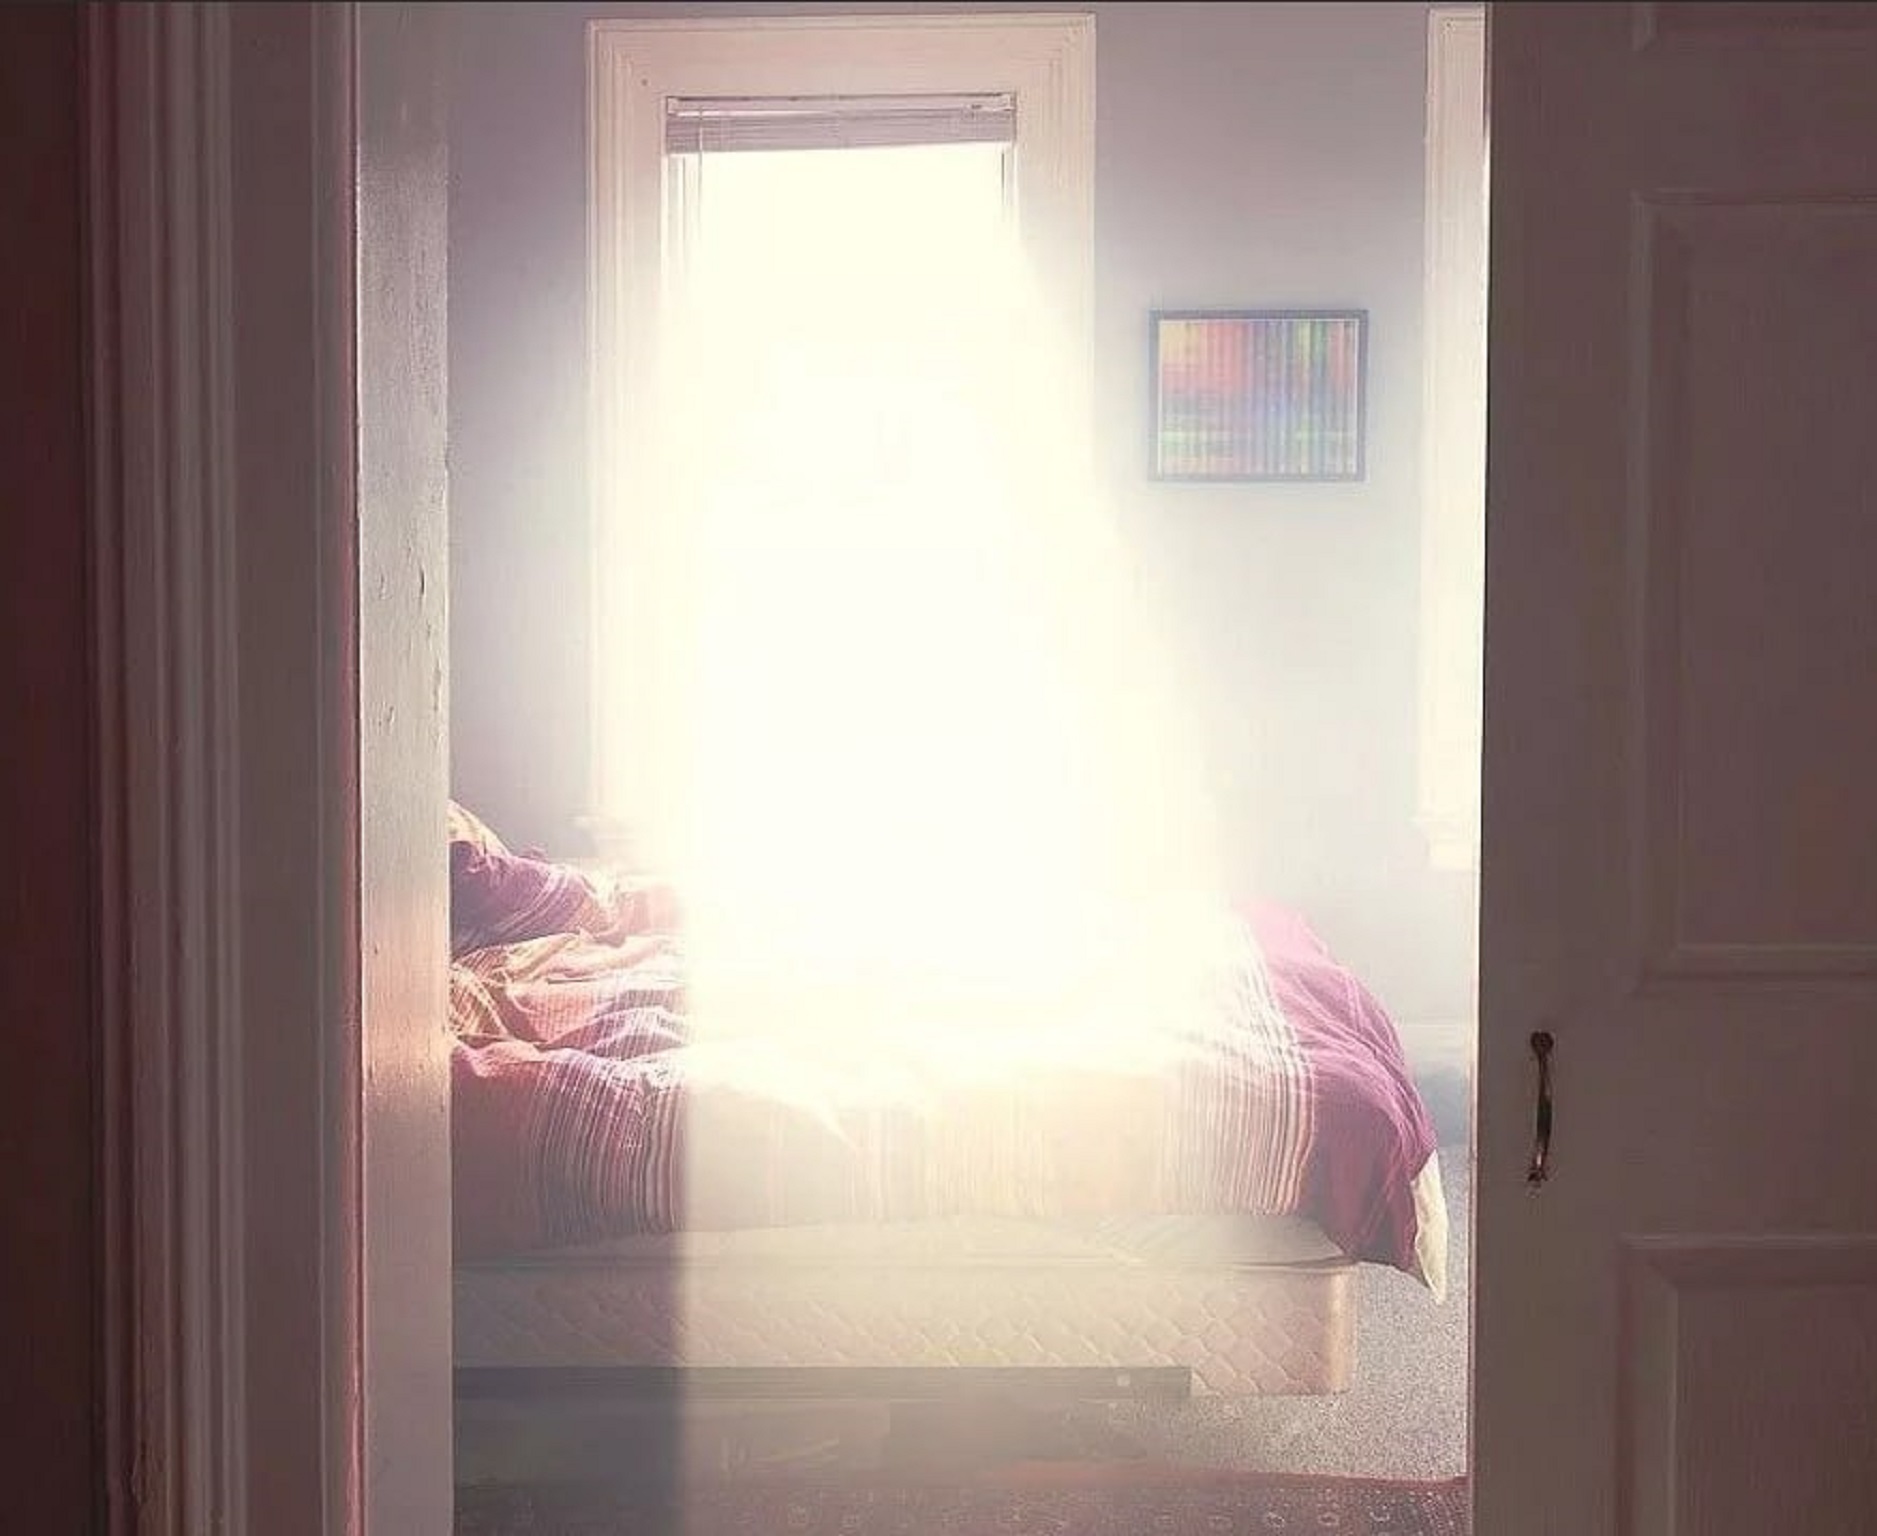 Подглядывание комната. Лучи солнца в комнате. Свет из окна. Солнечные блики в комнате. Лучи солнца через окно.